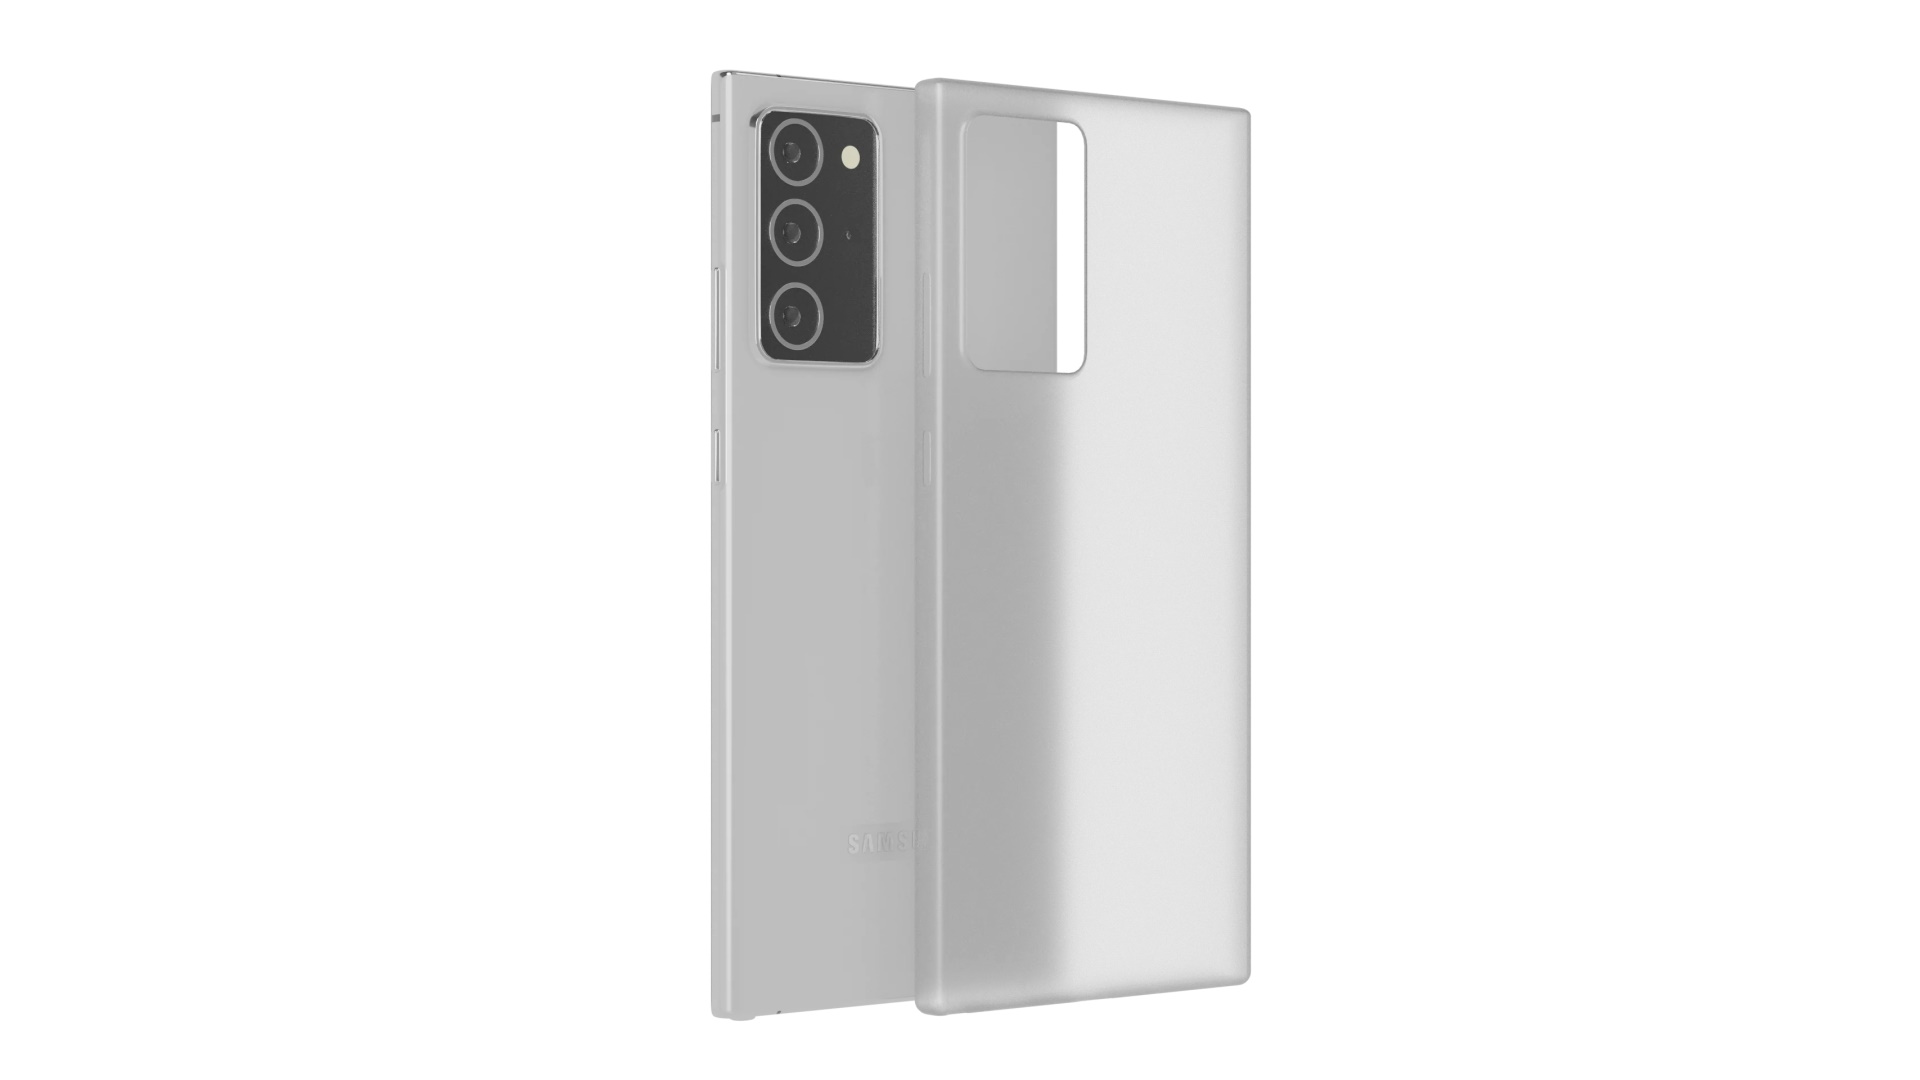 PHNX Galaxy Note 20 Ultra case